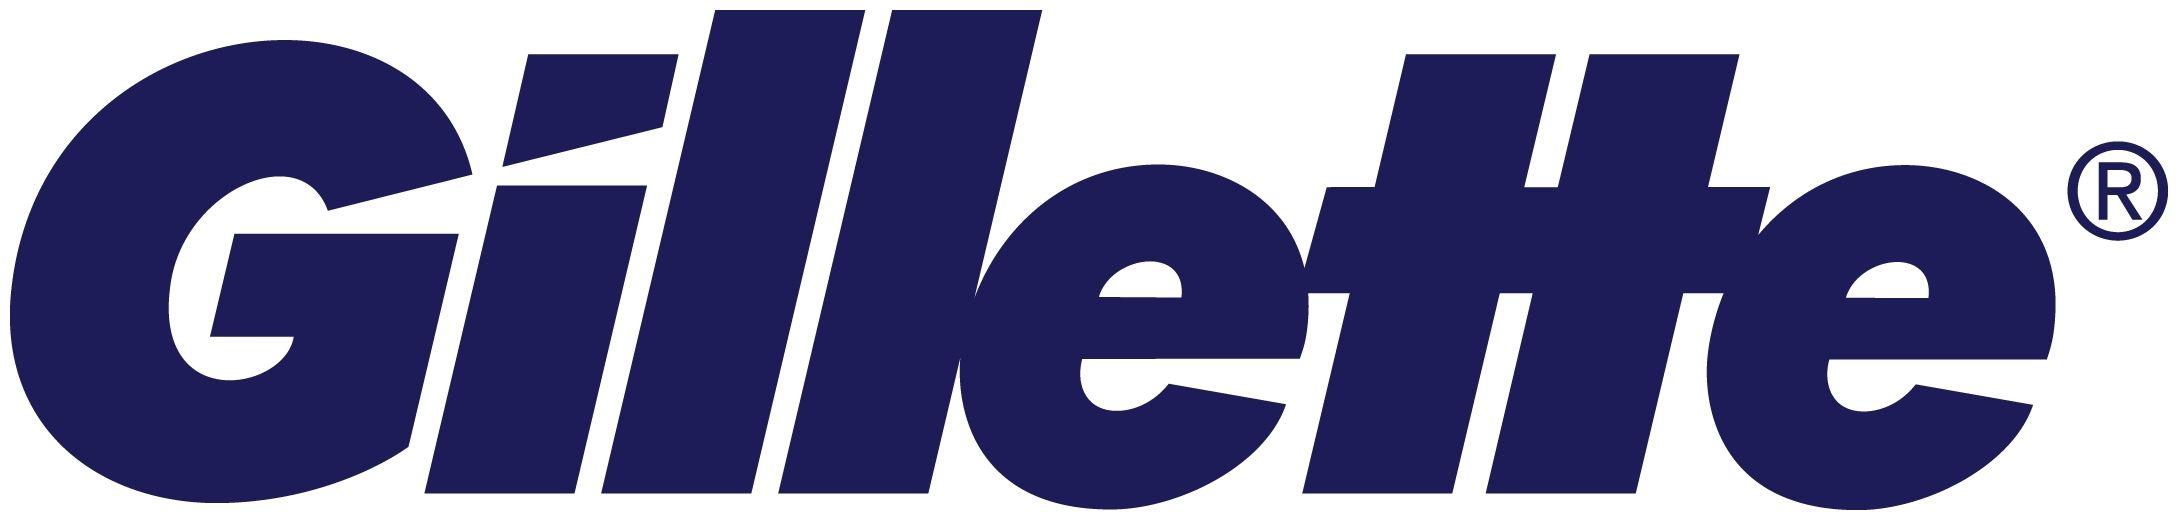 Gillette Logo - Gillette Logos